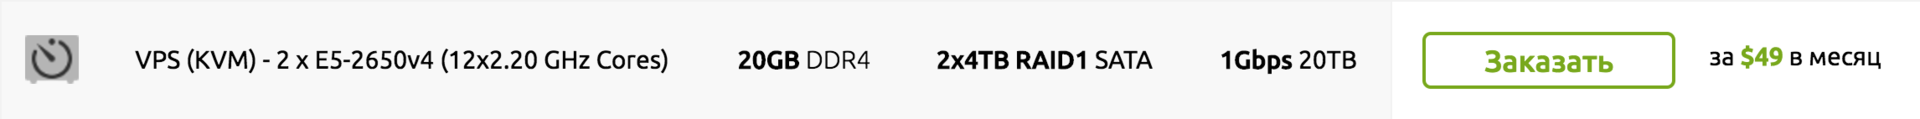 Чёрные серверы в Нидерландах с чёрной пятницы (предзаказ): 6х2.20GHz 10GB DDR4 240GB SSD 1Gbps 10TB — $29 - месяц - 11